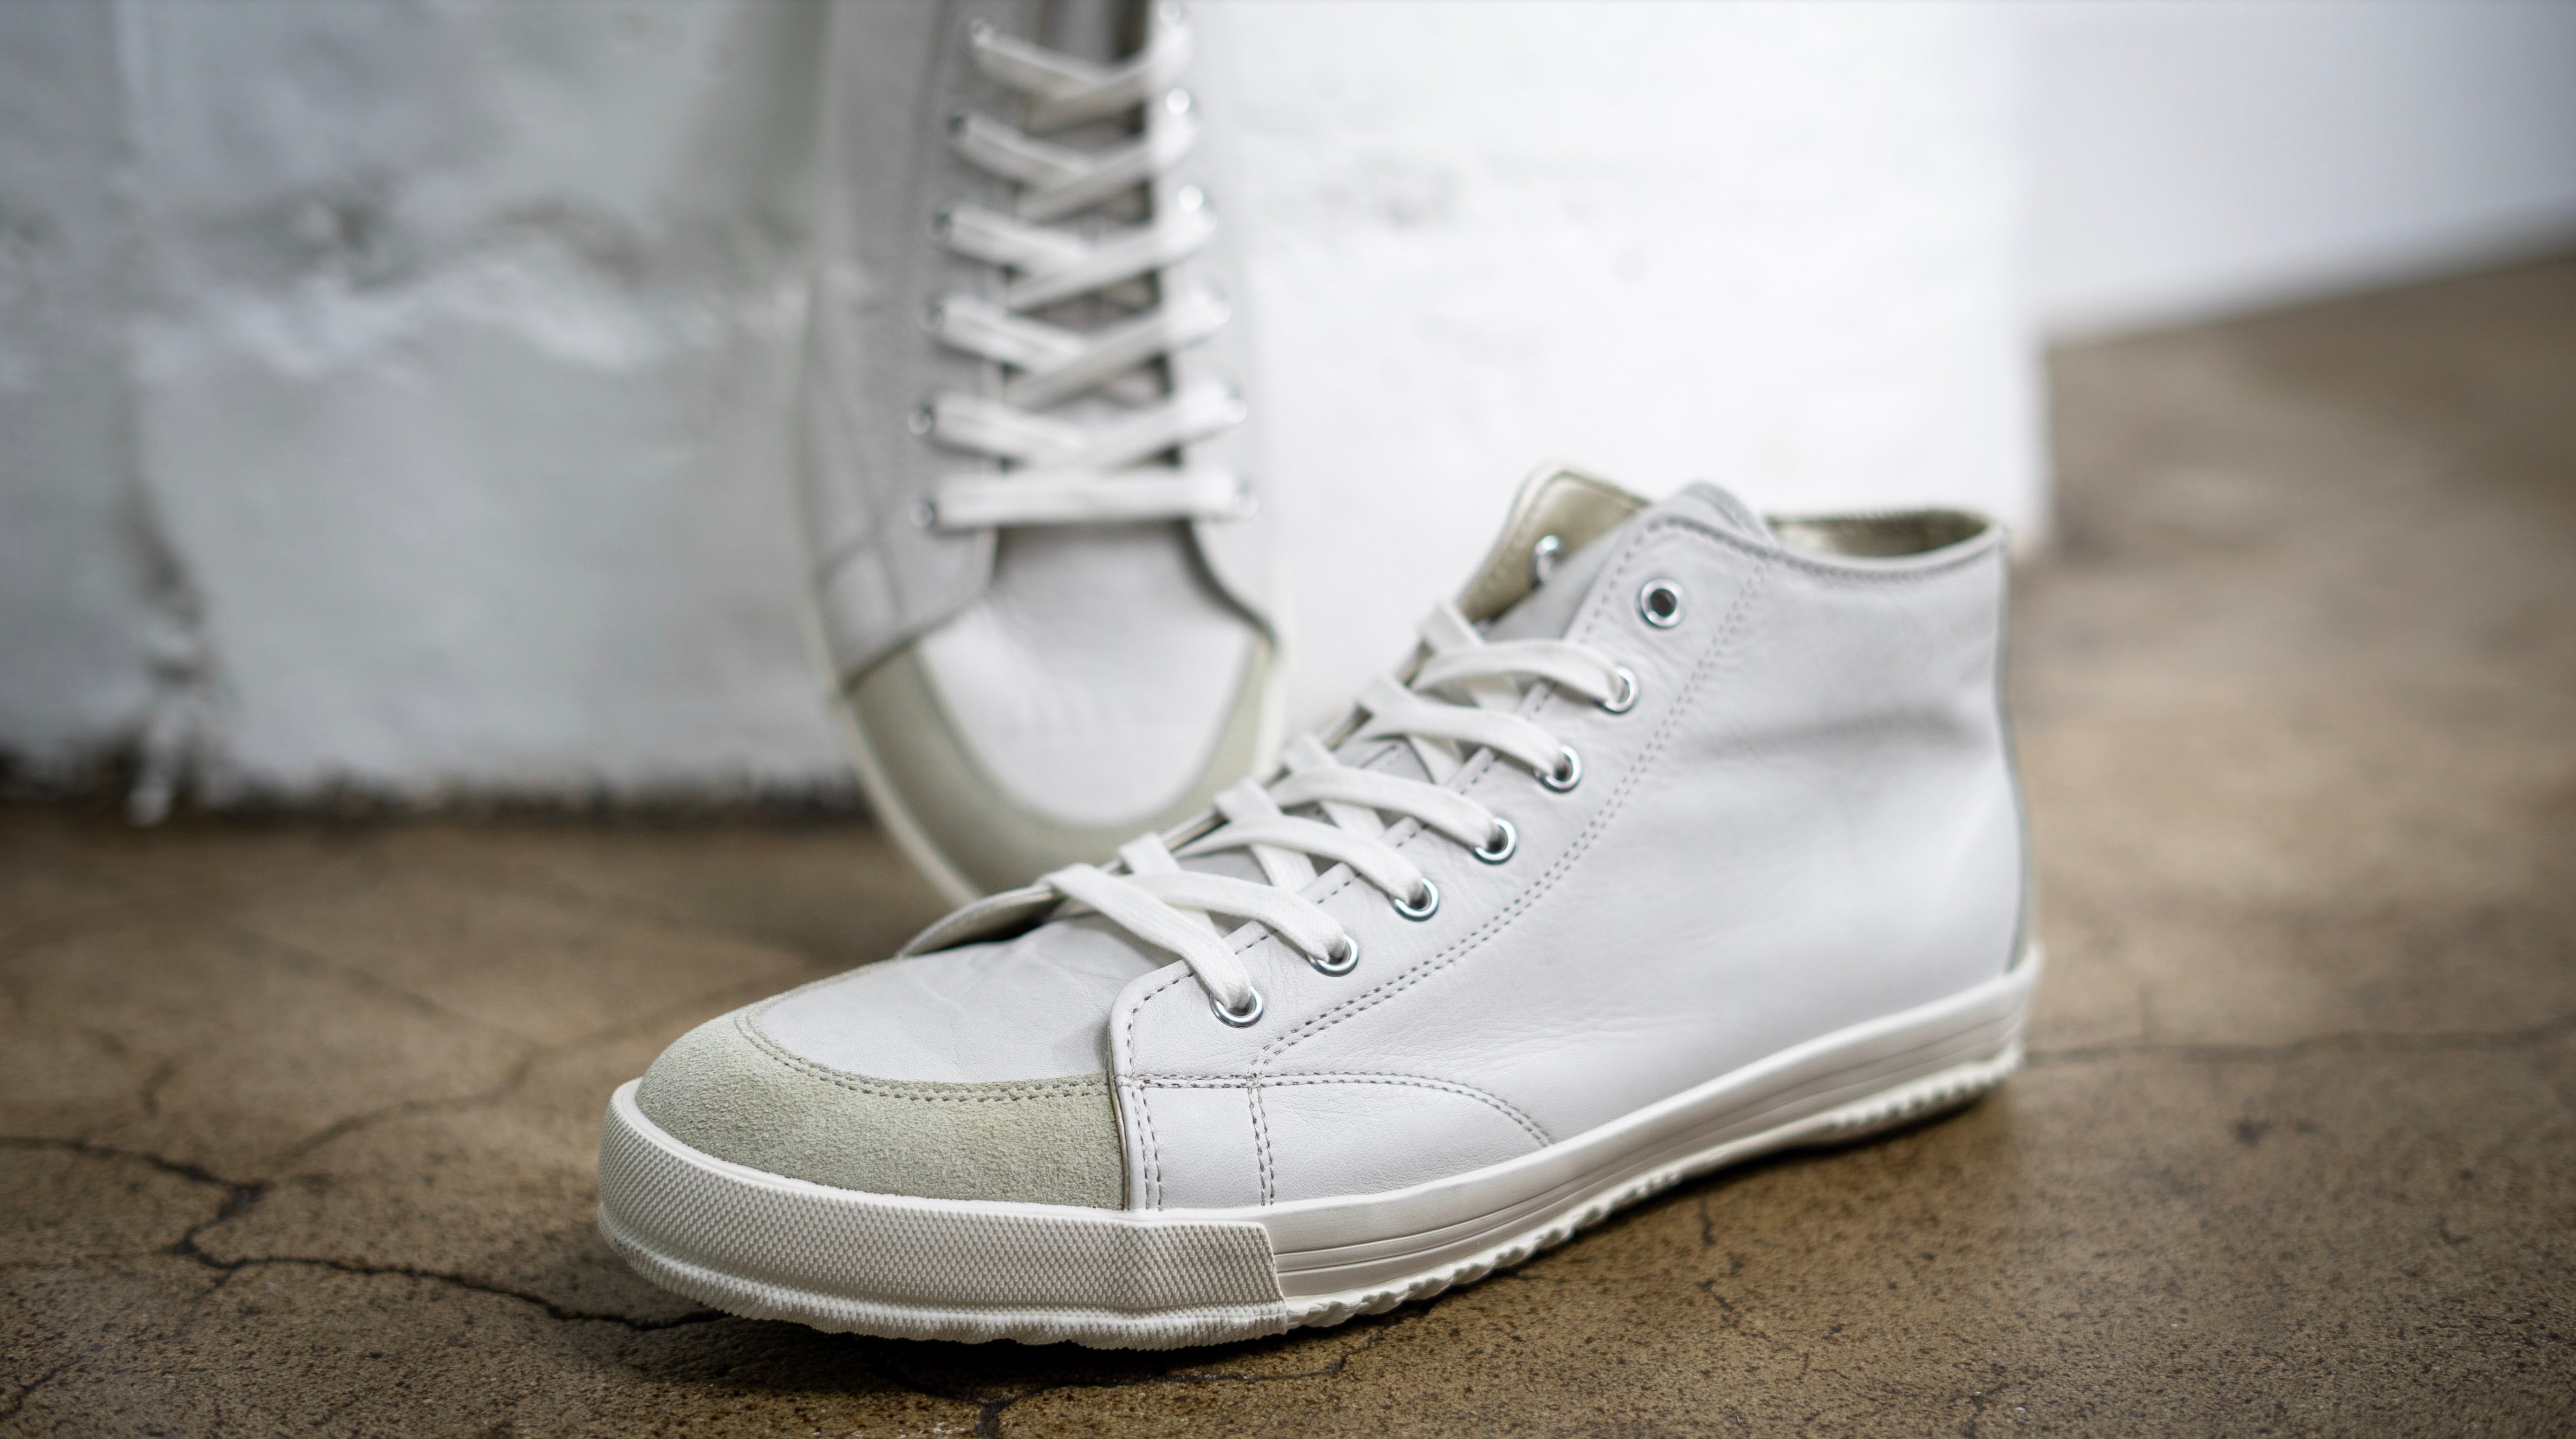 SPM - 356 Handmade Shoes - White